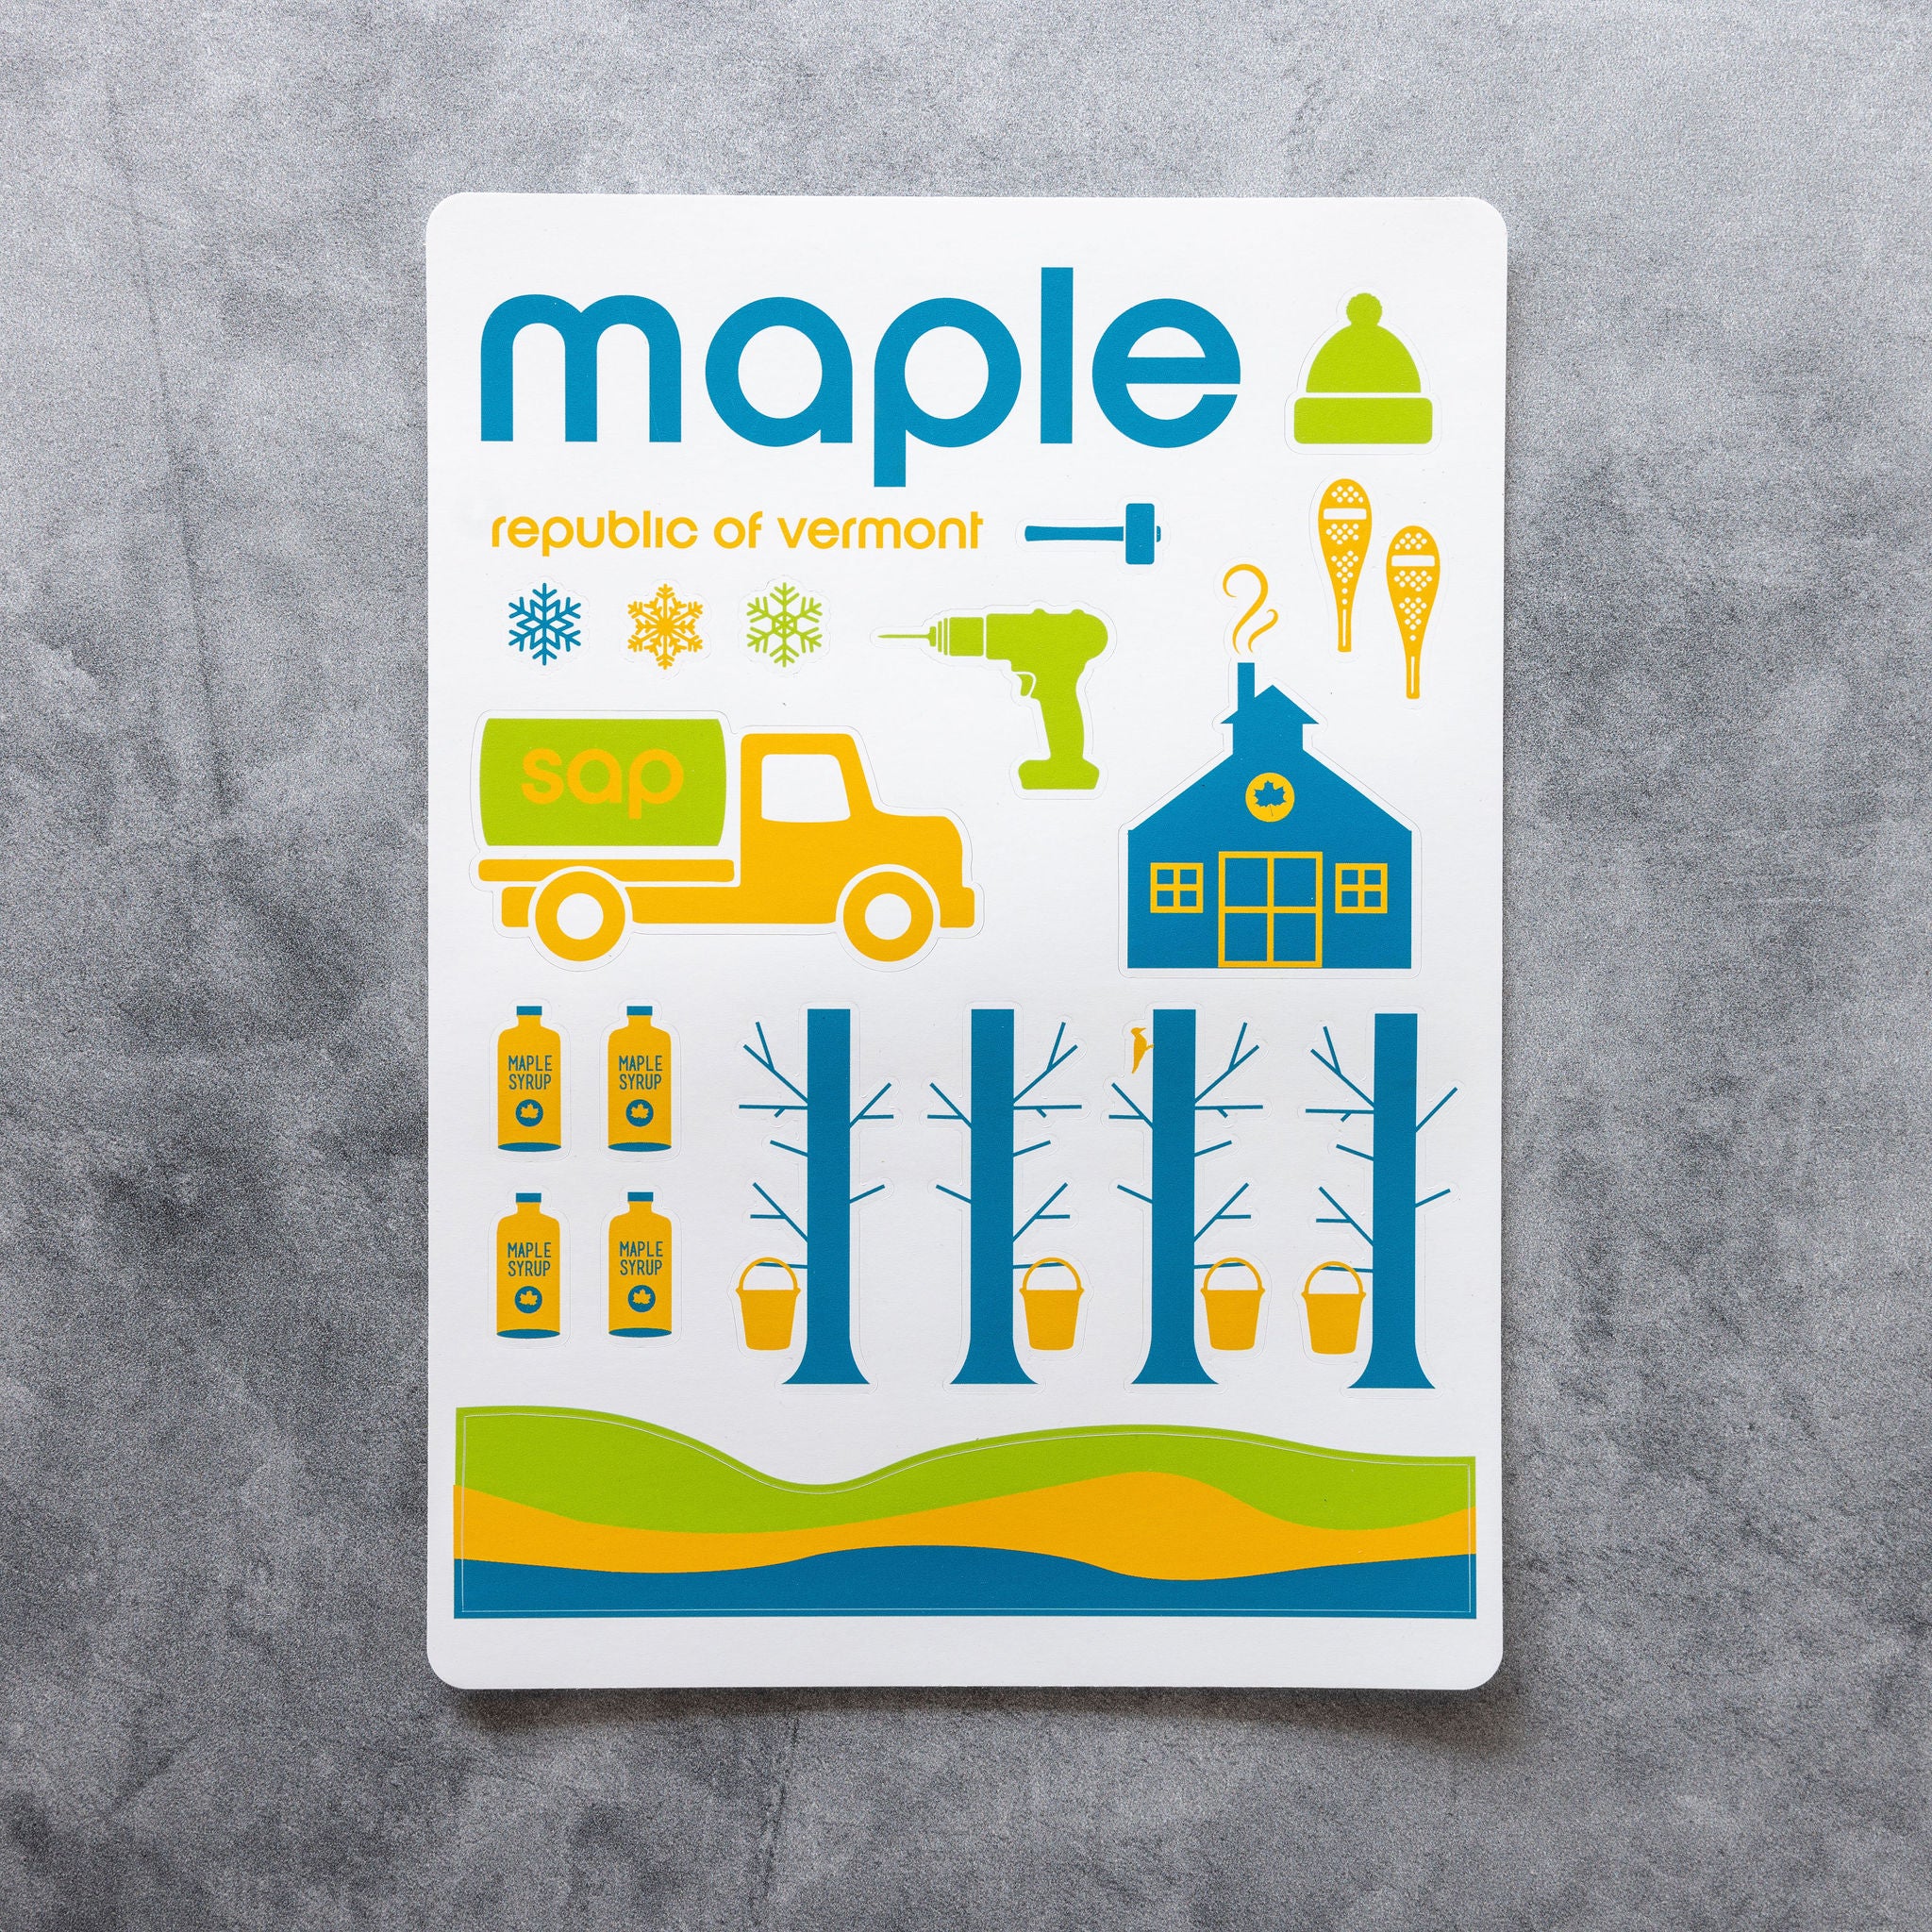 Maple & Honey Sticker Sheets